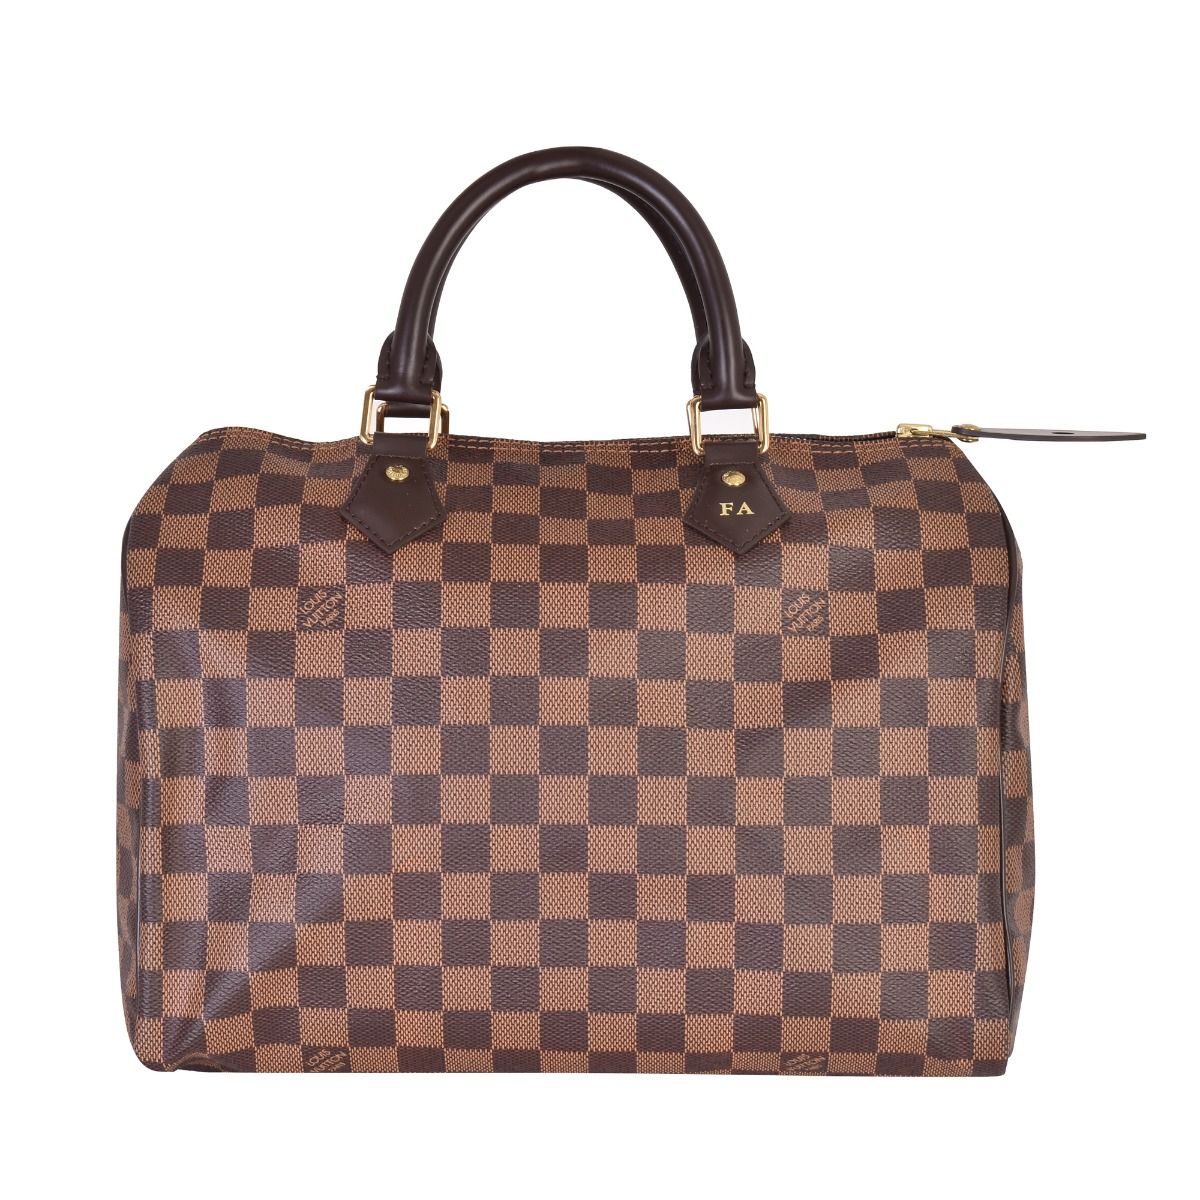 Louis Vuitton Speedy 30 Damier Azur Canvas Handbag Tote Lock & Keys